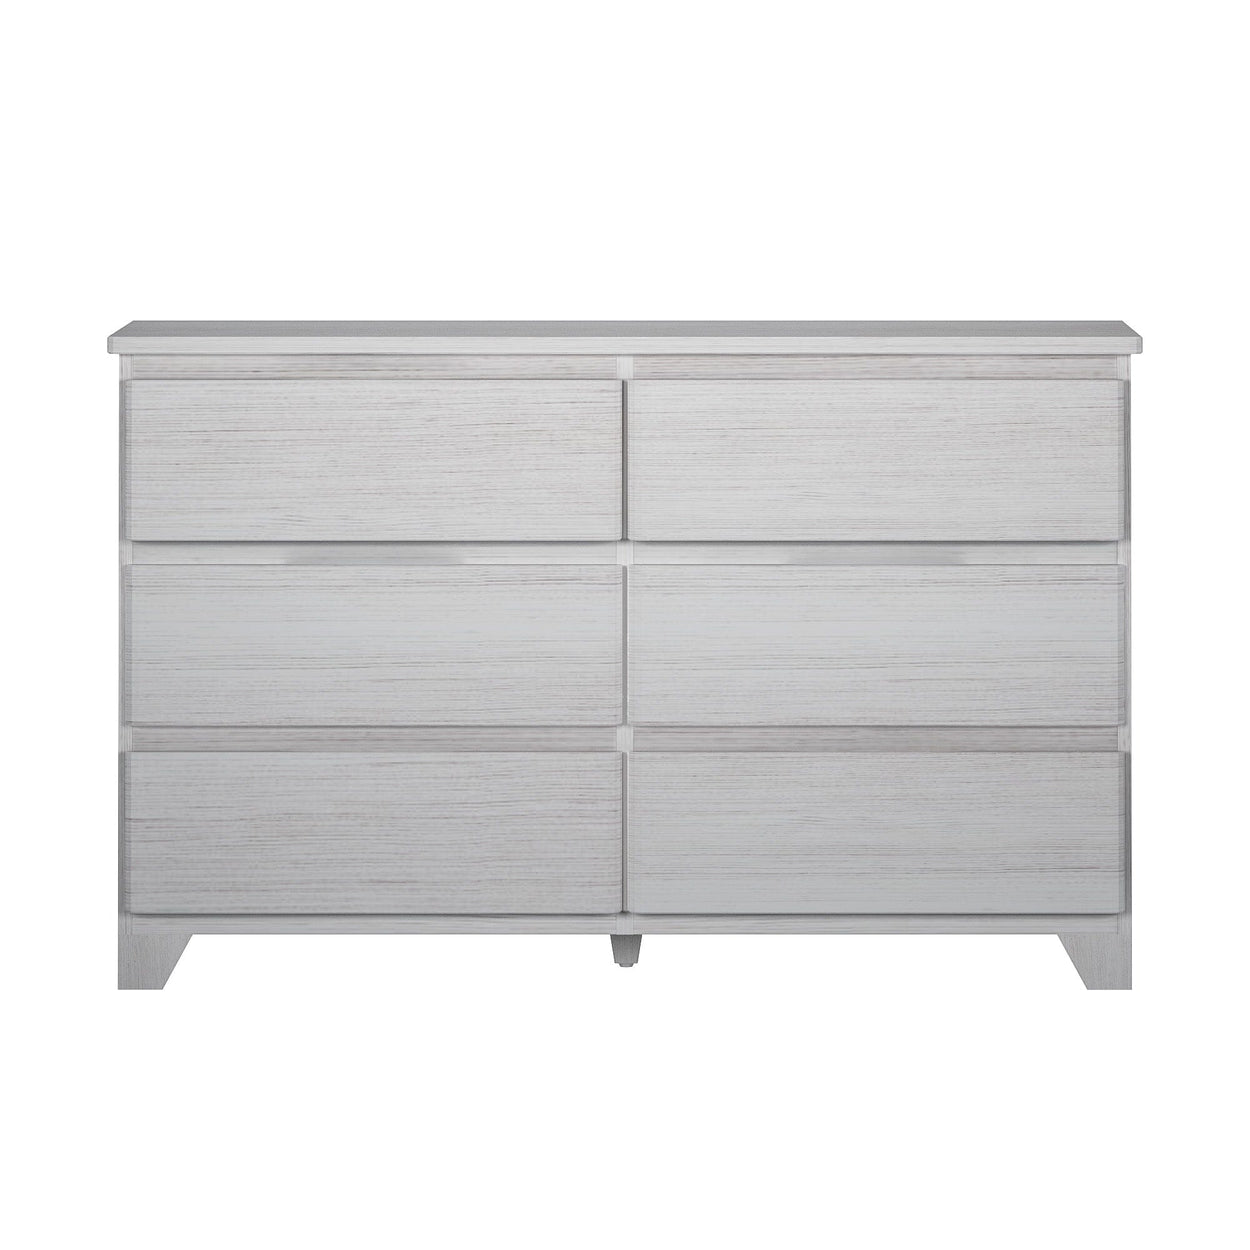 190006-182 : Furniture K/D 6 Drawer Dresser w/ metal drawer glides (52"L x 15.75"W x 32.75"H), White Wash